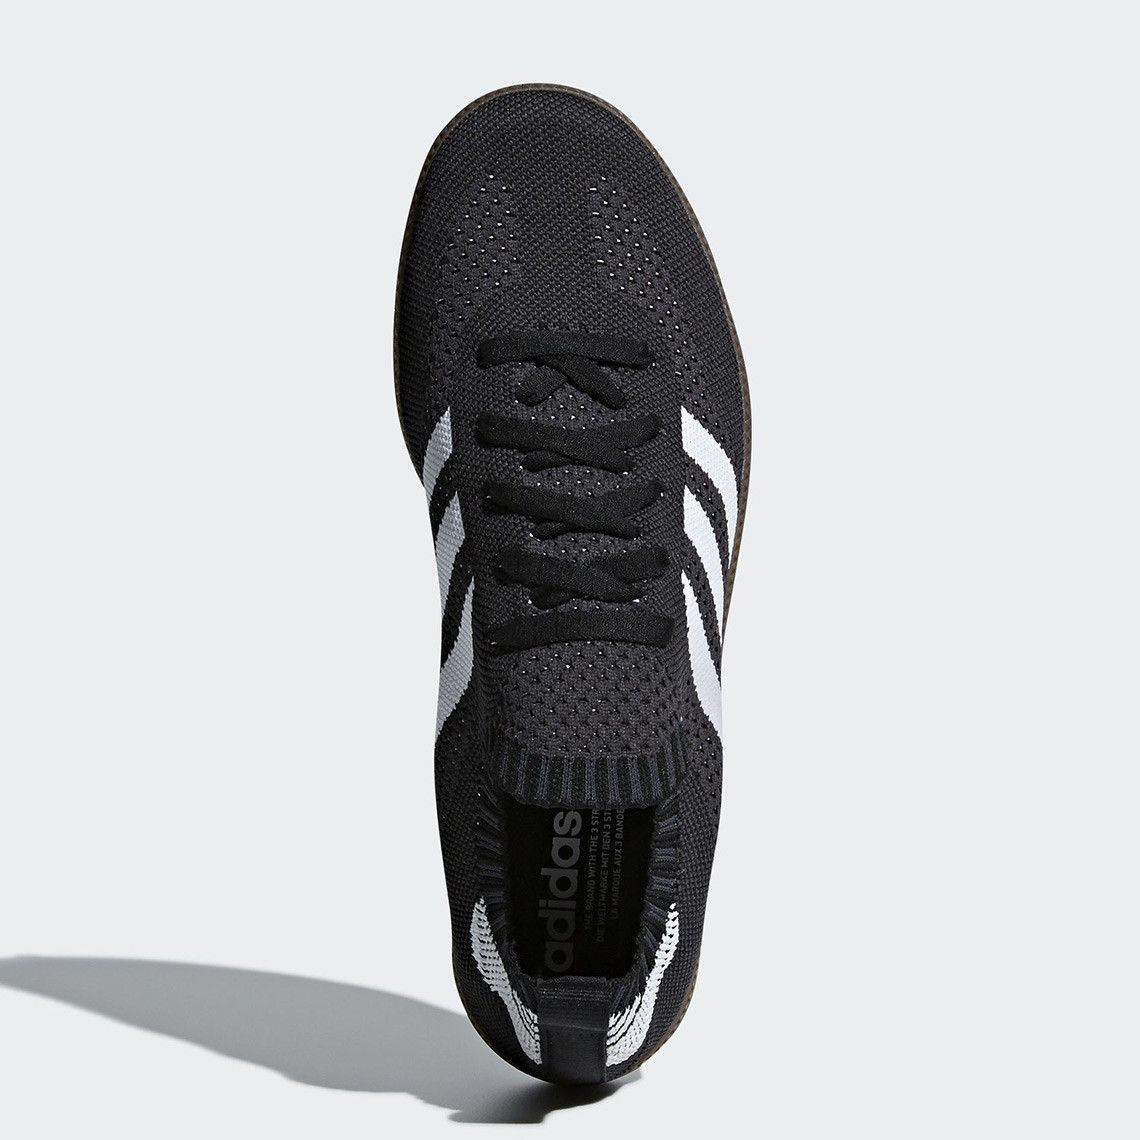 Sepatu adidas Samba Primeknit - Sneaker adidas baru 2018 - Black - Info Harga Rilis Review dan Detail Produk